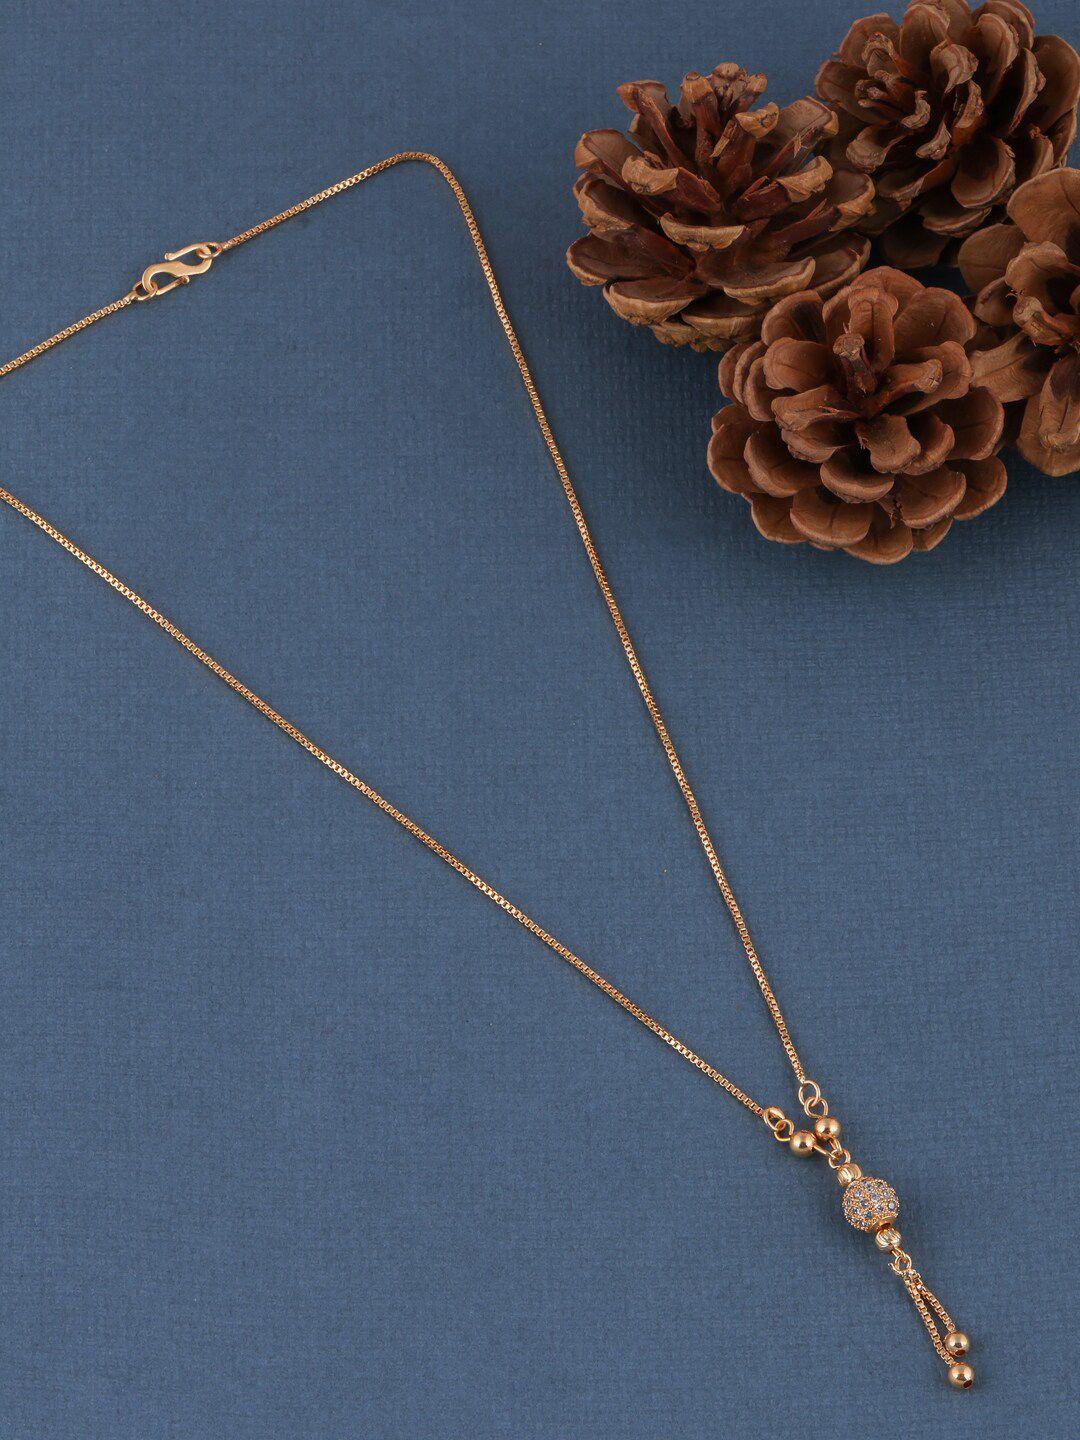 brandsoon rose brass rose gold-plated necklace